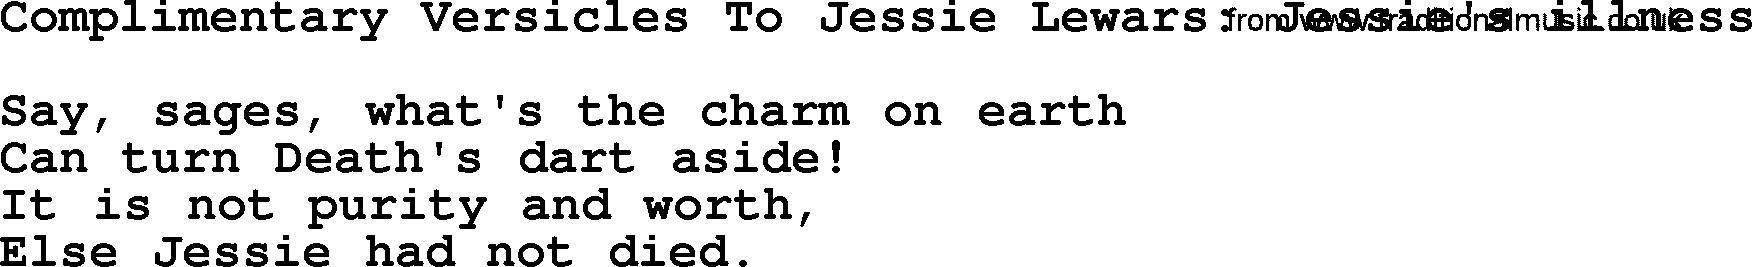 Robert Burns Songs & Lyrics: Complimentary Versicles To Jessie Lewars Jessie's Illness